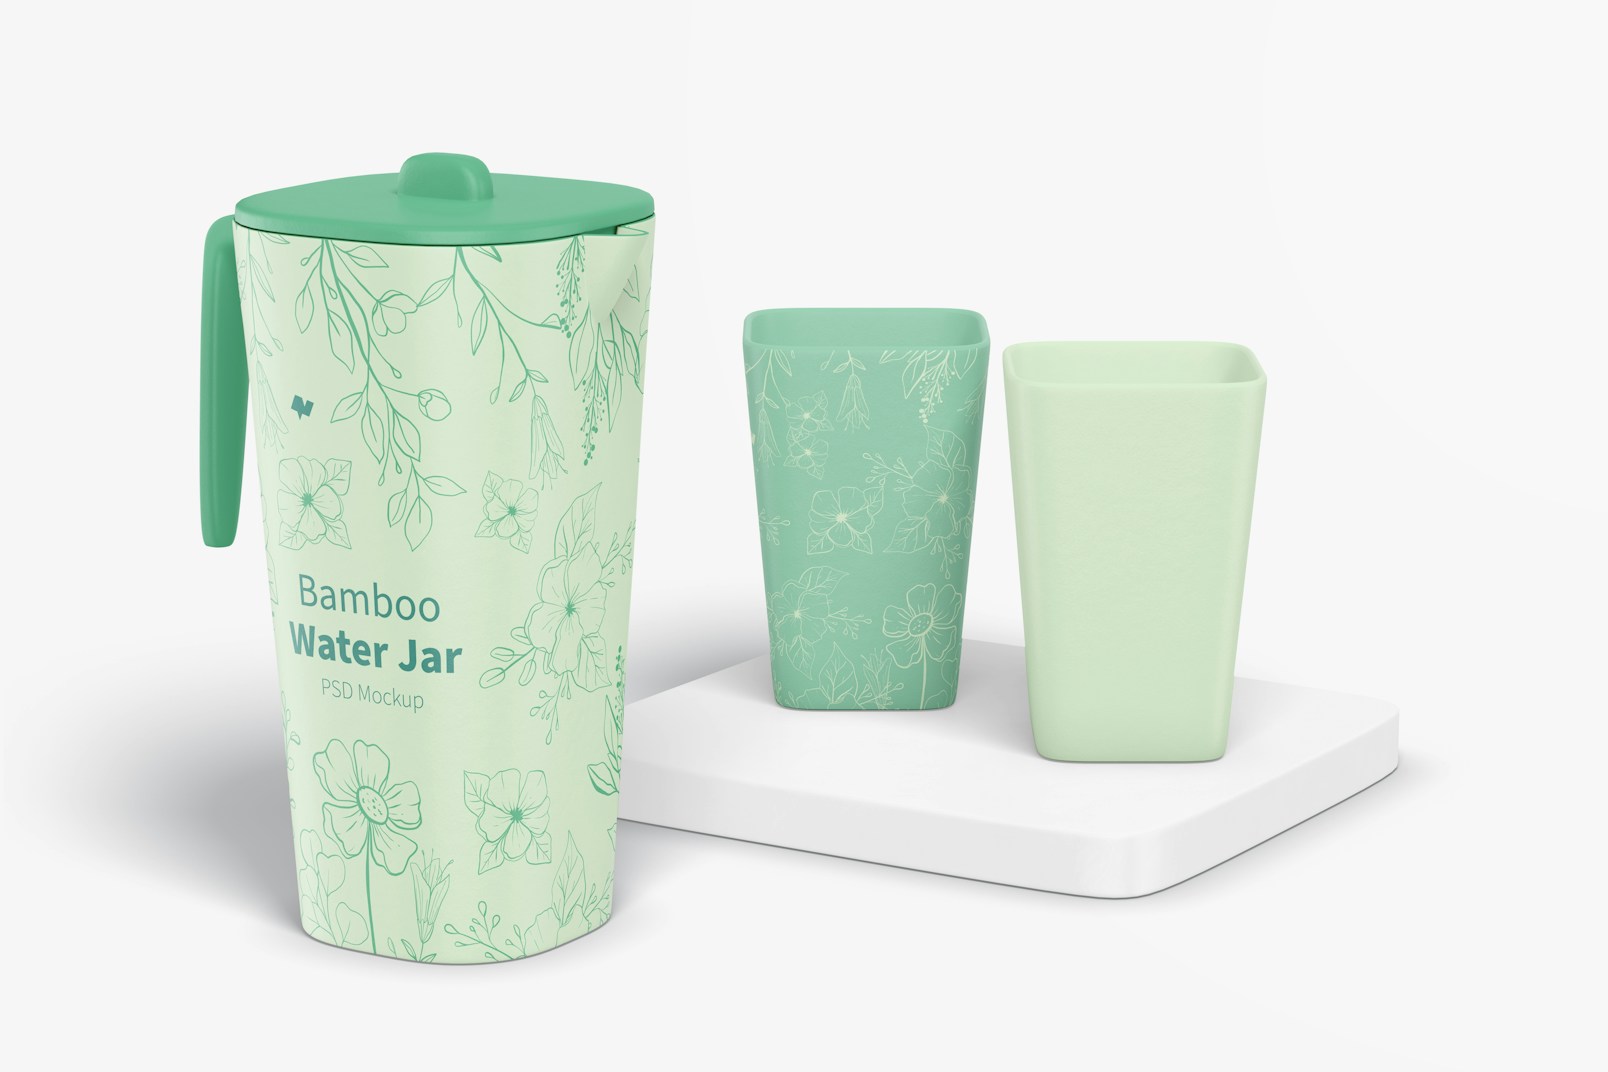 Bamboo Fiber Water Jar with Glasses Mockup